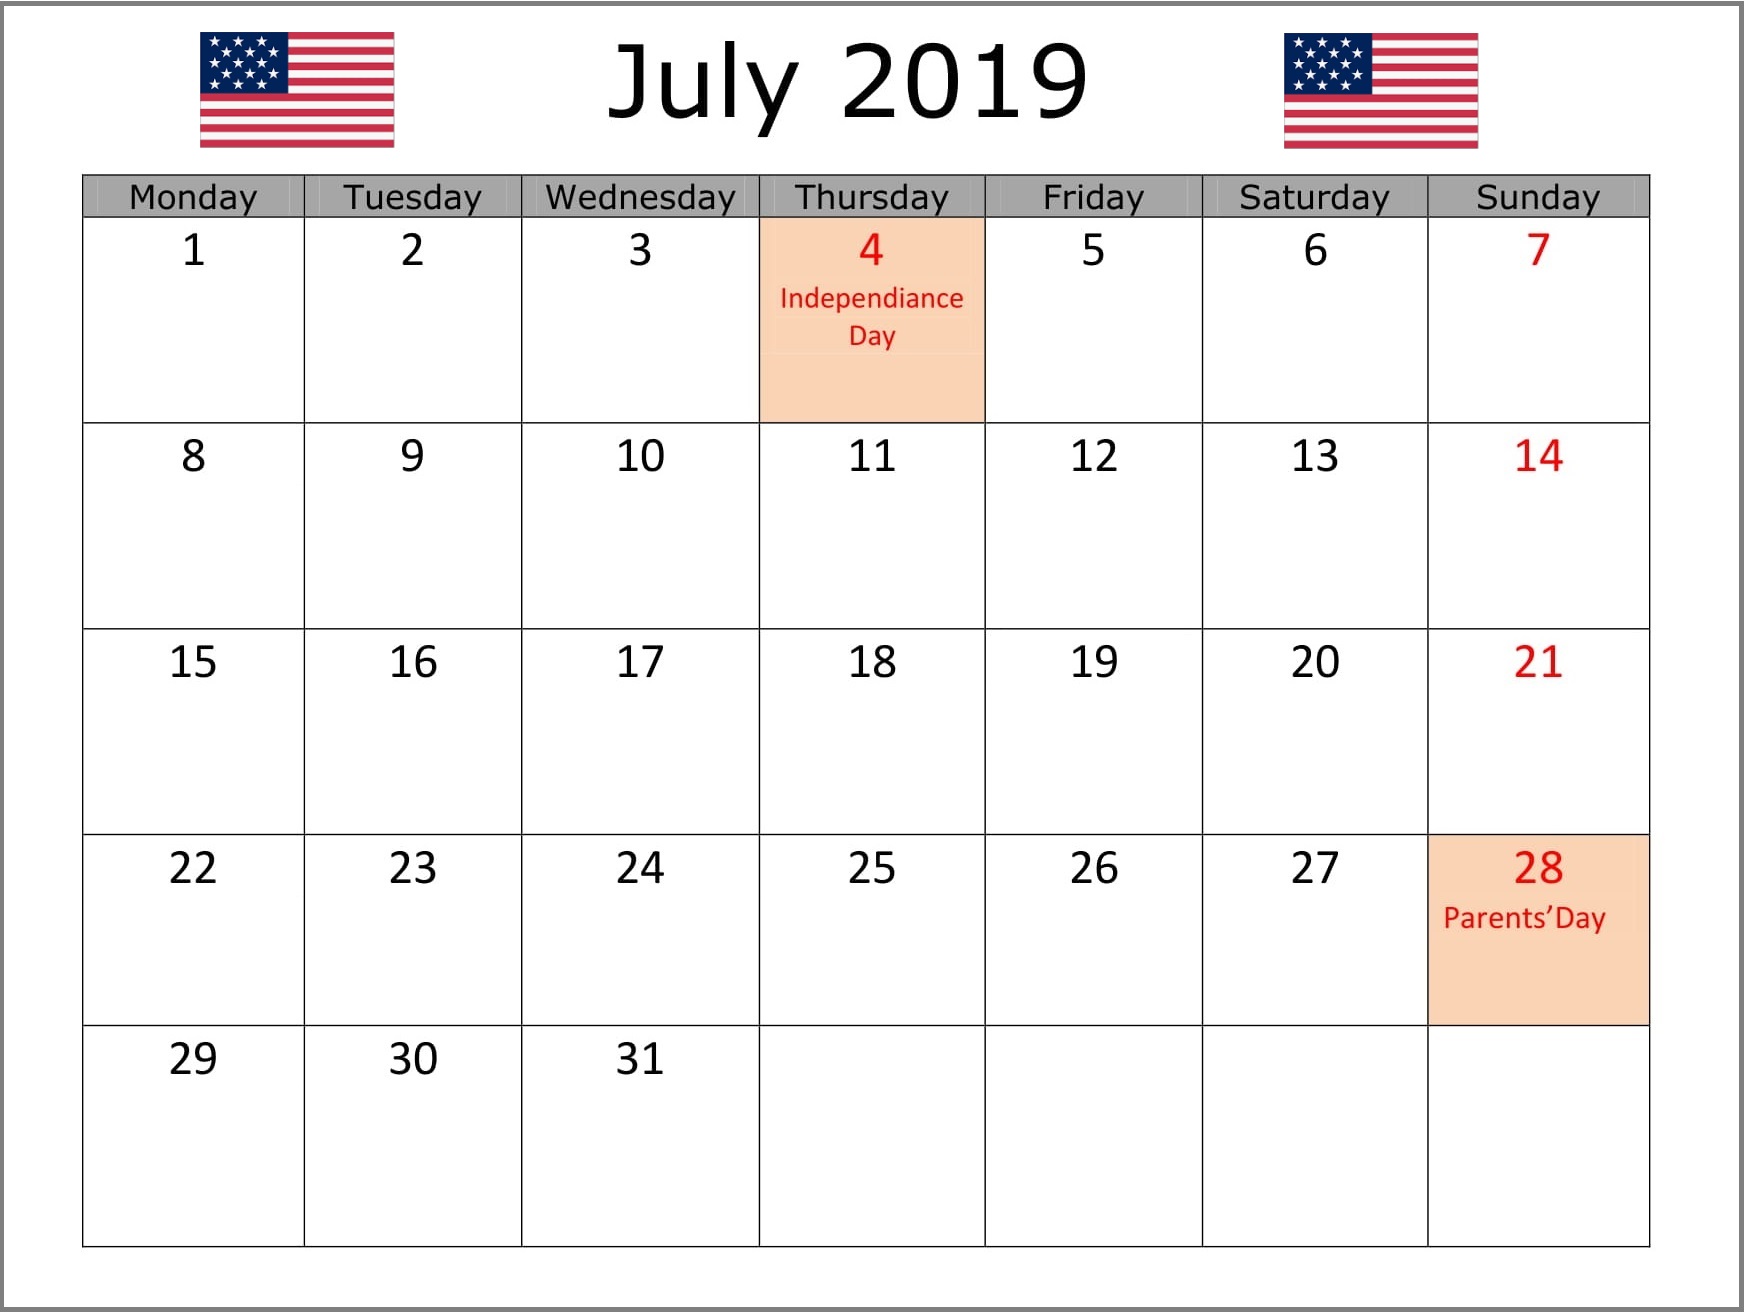 July 2019 USA Holidays Calendar